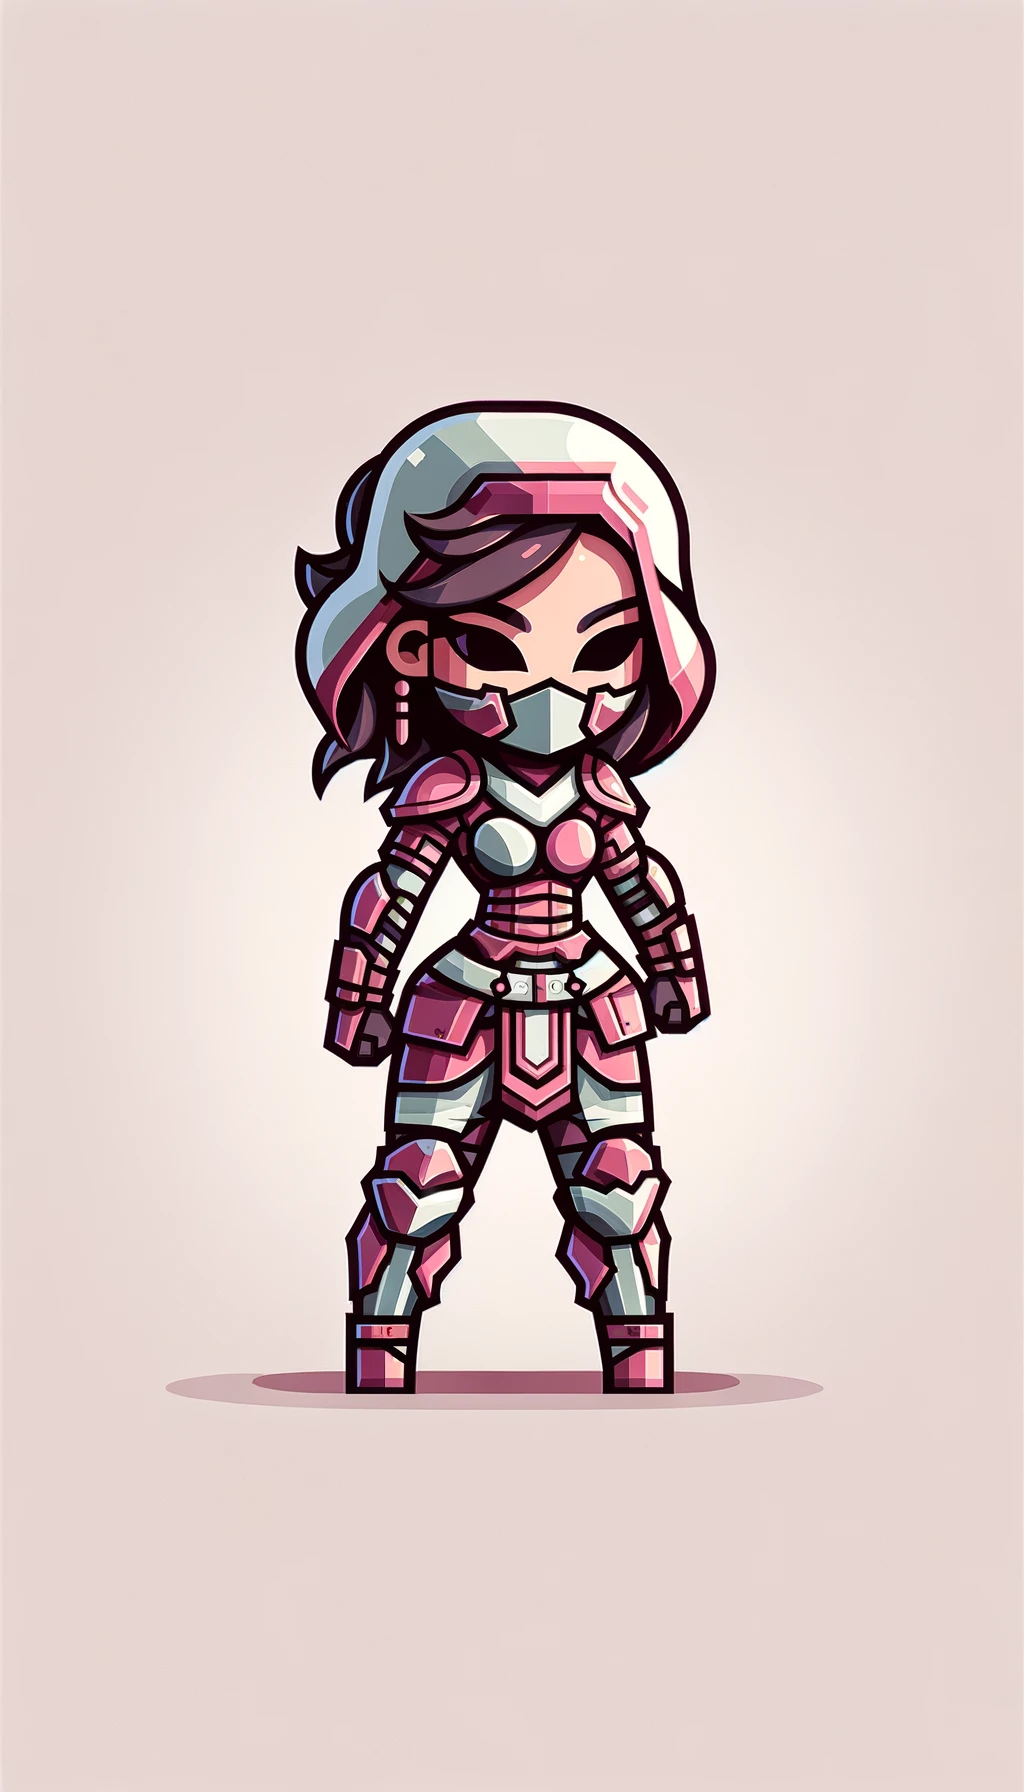 femme en armure rose style guerrier